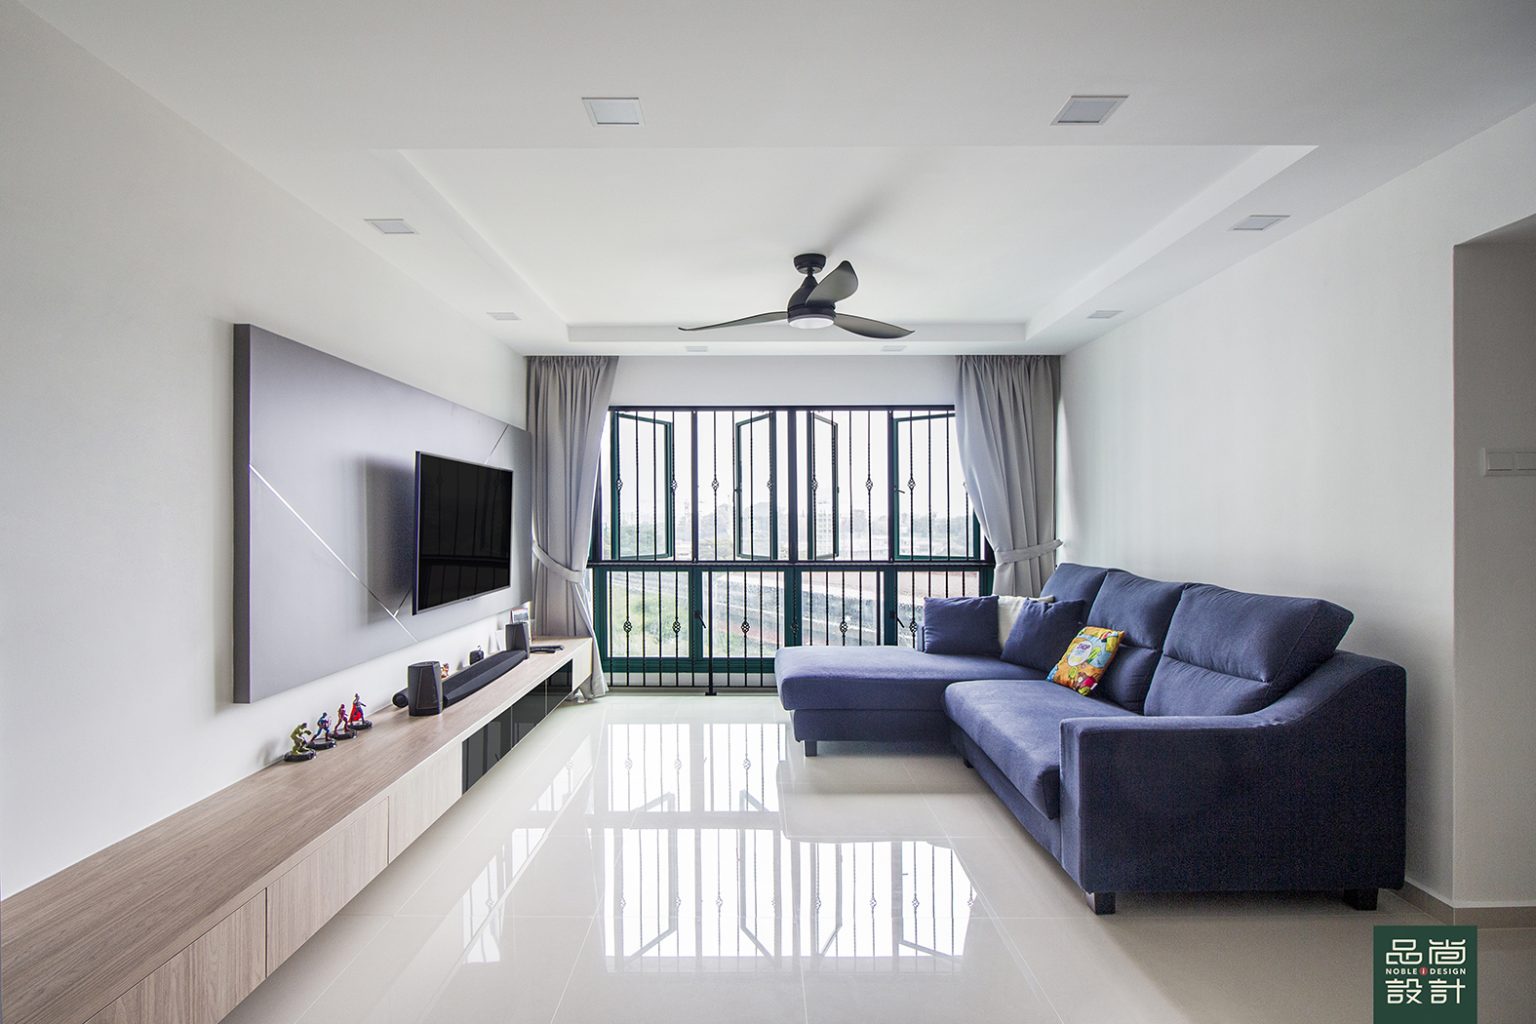 squarerooms-noble-design-living-room-hdb